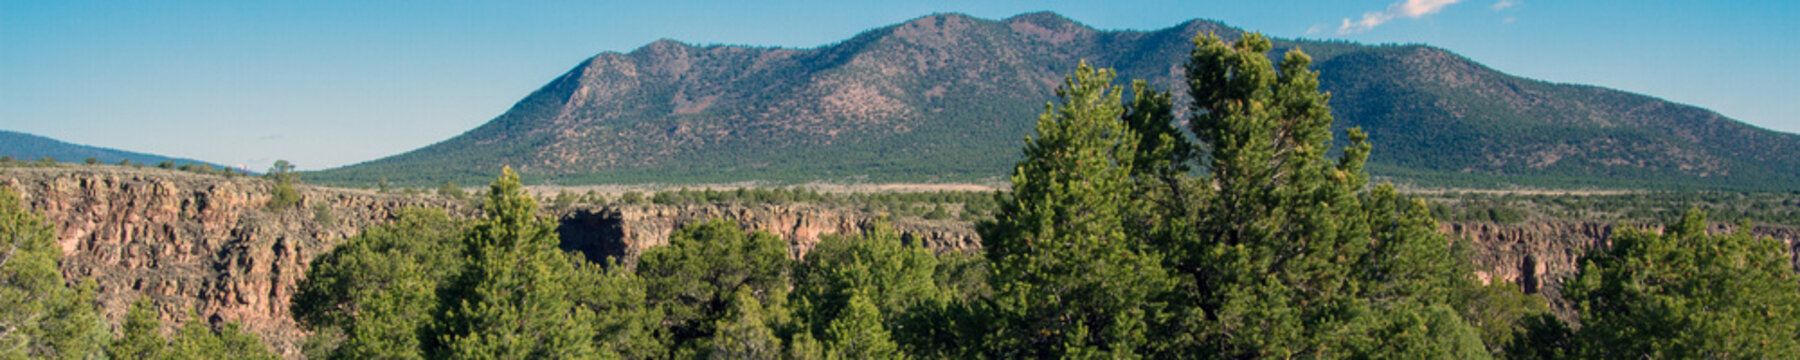 Ultra-wide panorama of pinyon-juniper woodland along the Rio Grande in Rio Grande del Norte National Monument in New Mexico